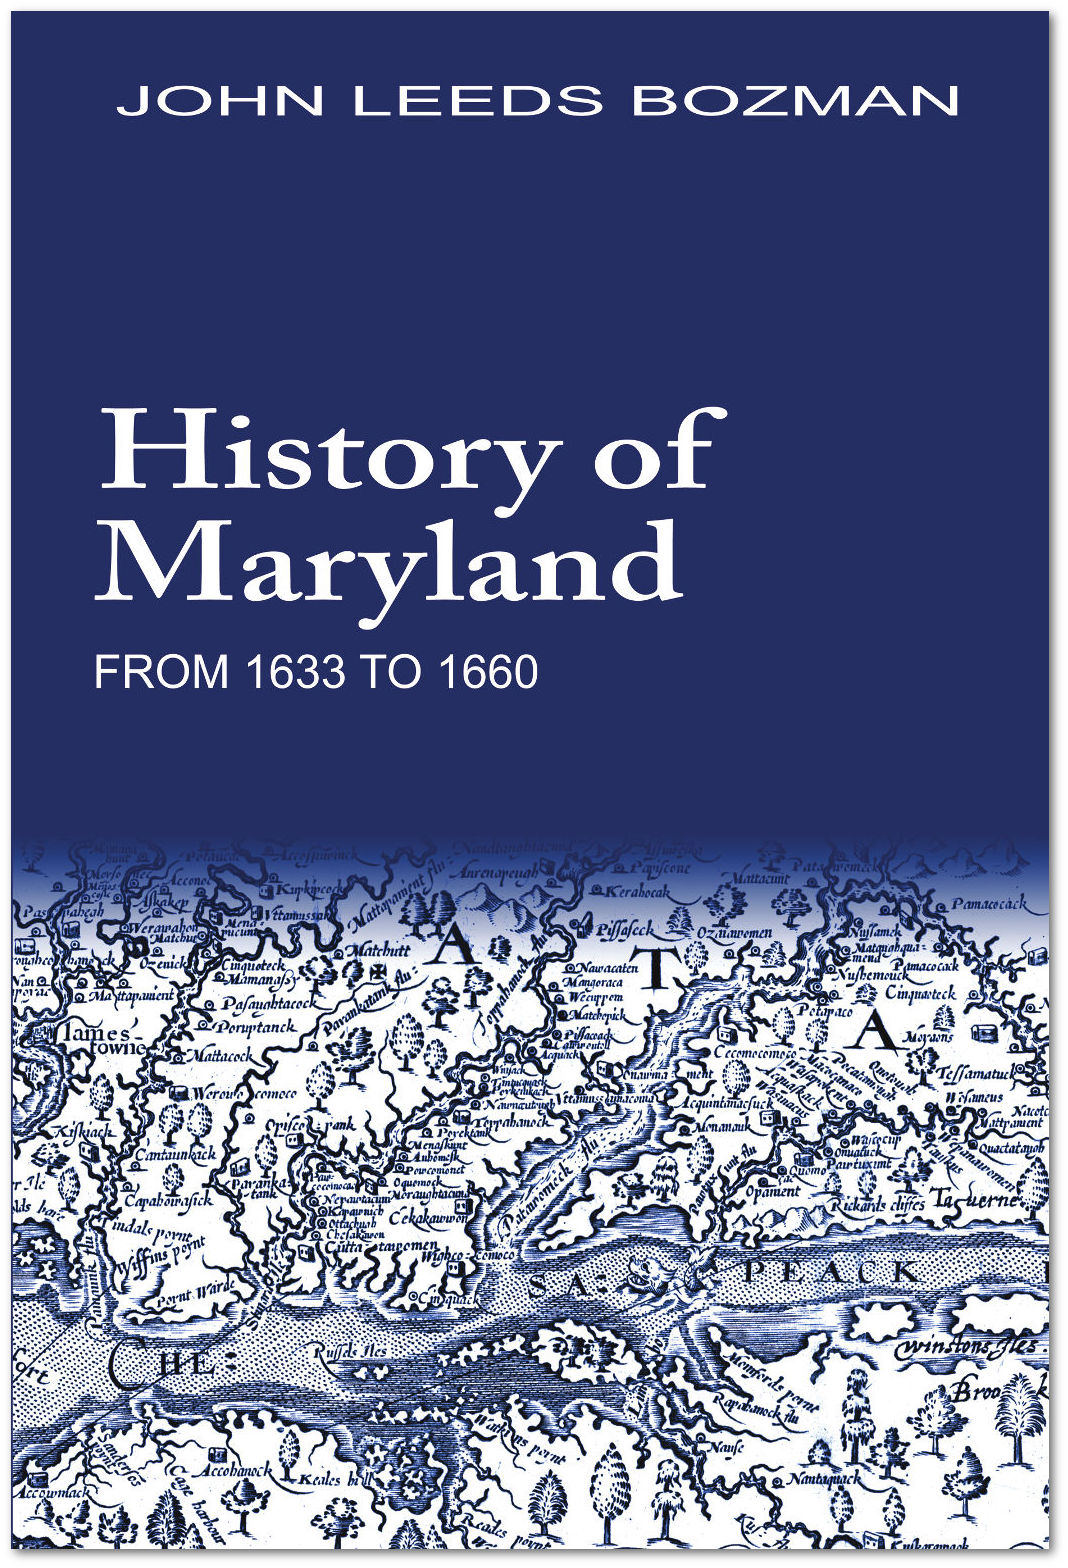 History of Maryland: John Leeds Bozman